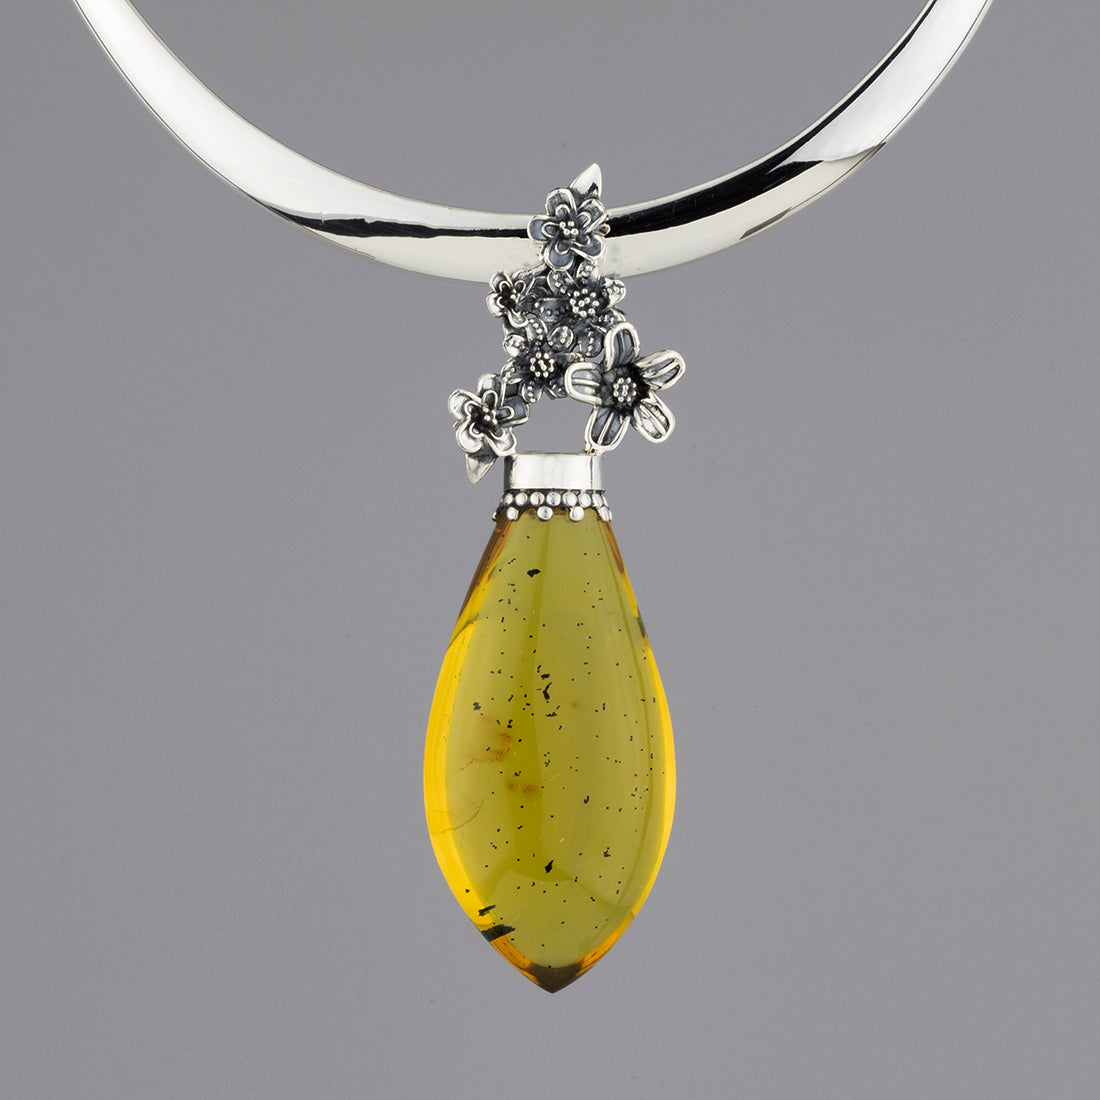 large Chiapas Mexican amber pendant necklace